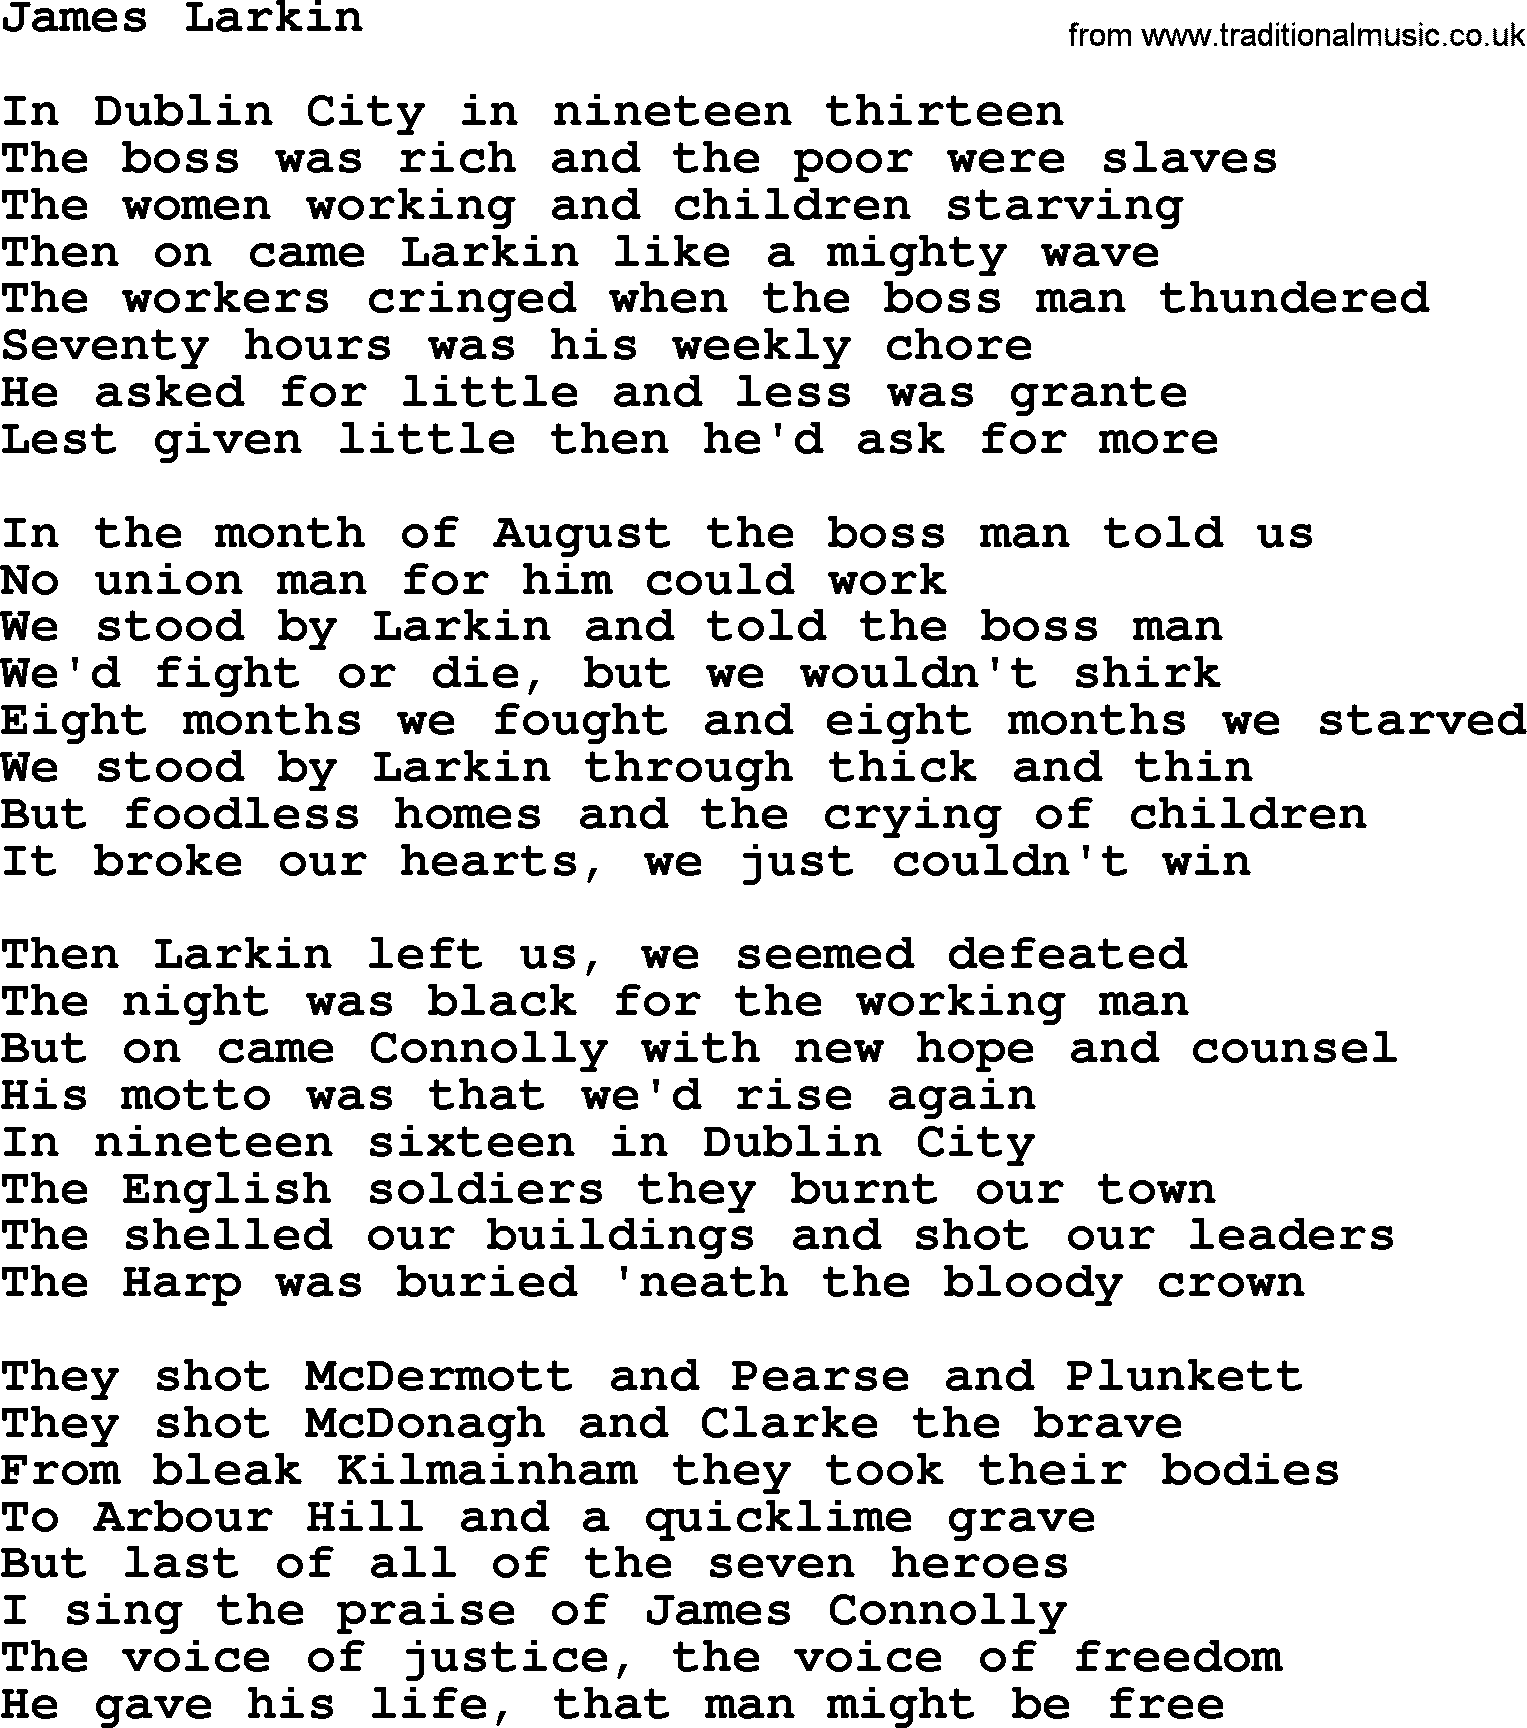 The Dubliners song: James Larkin, lyrics